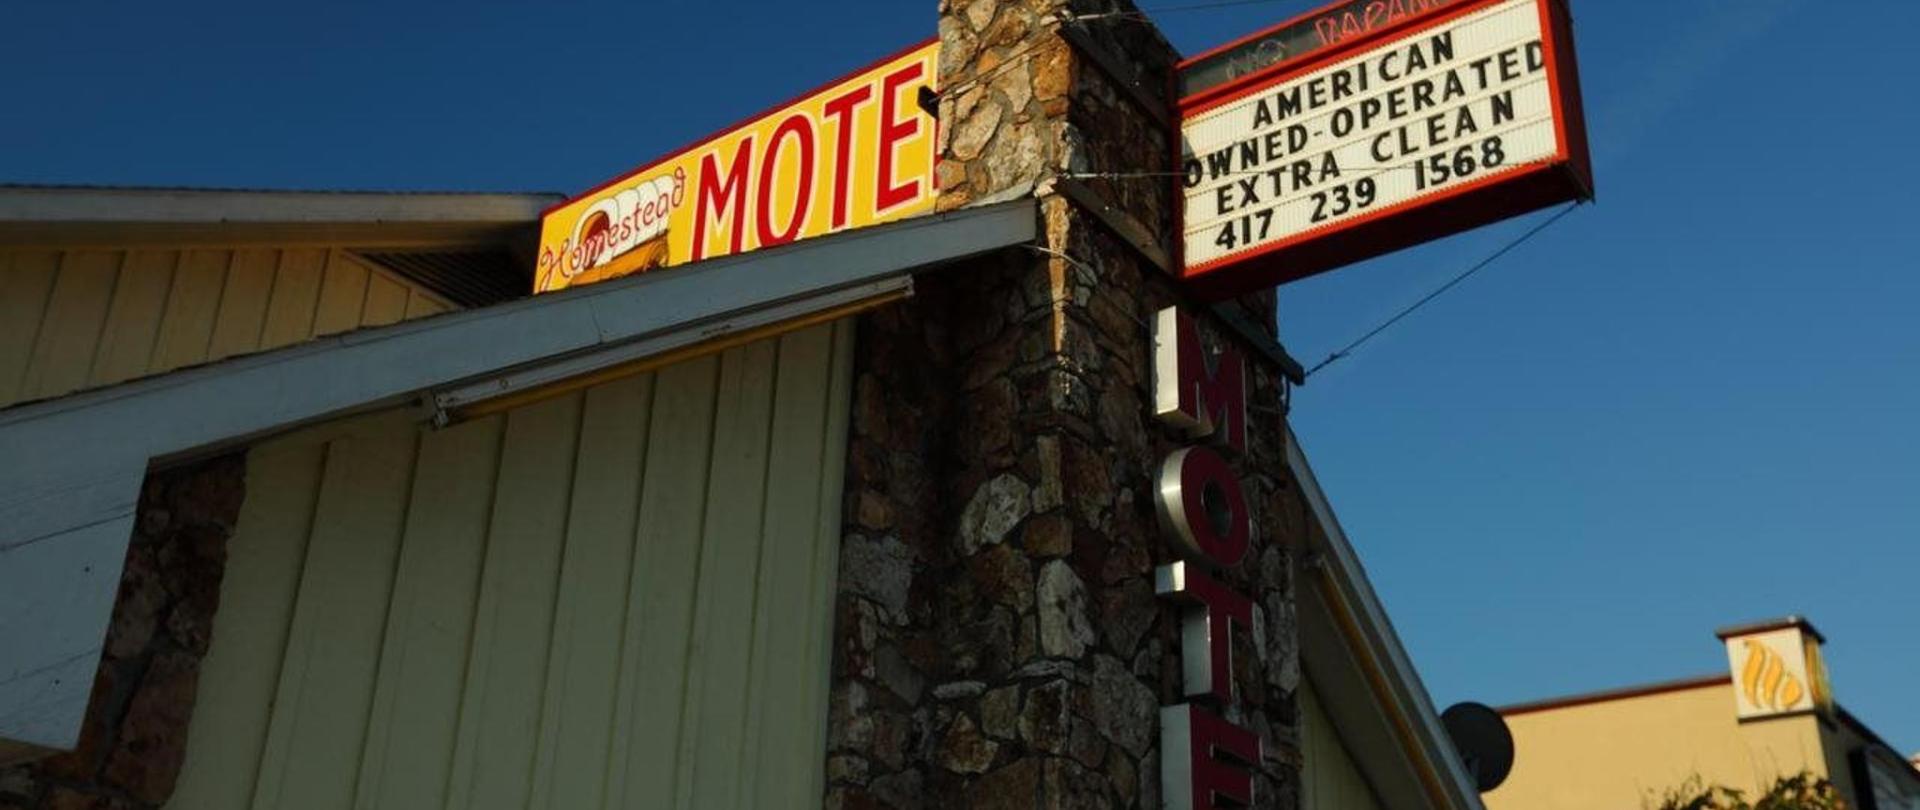 Homestead Motel